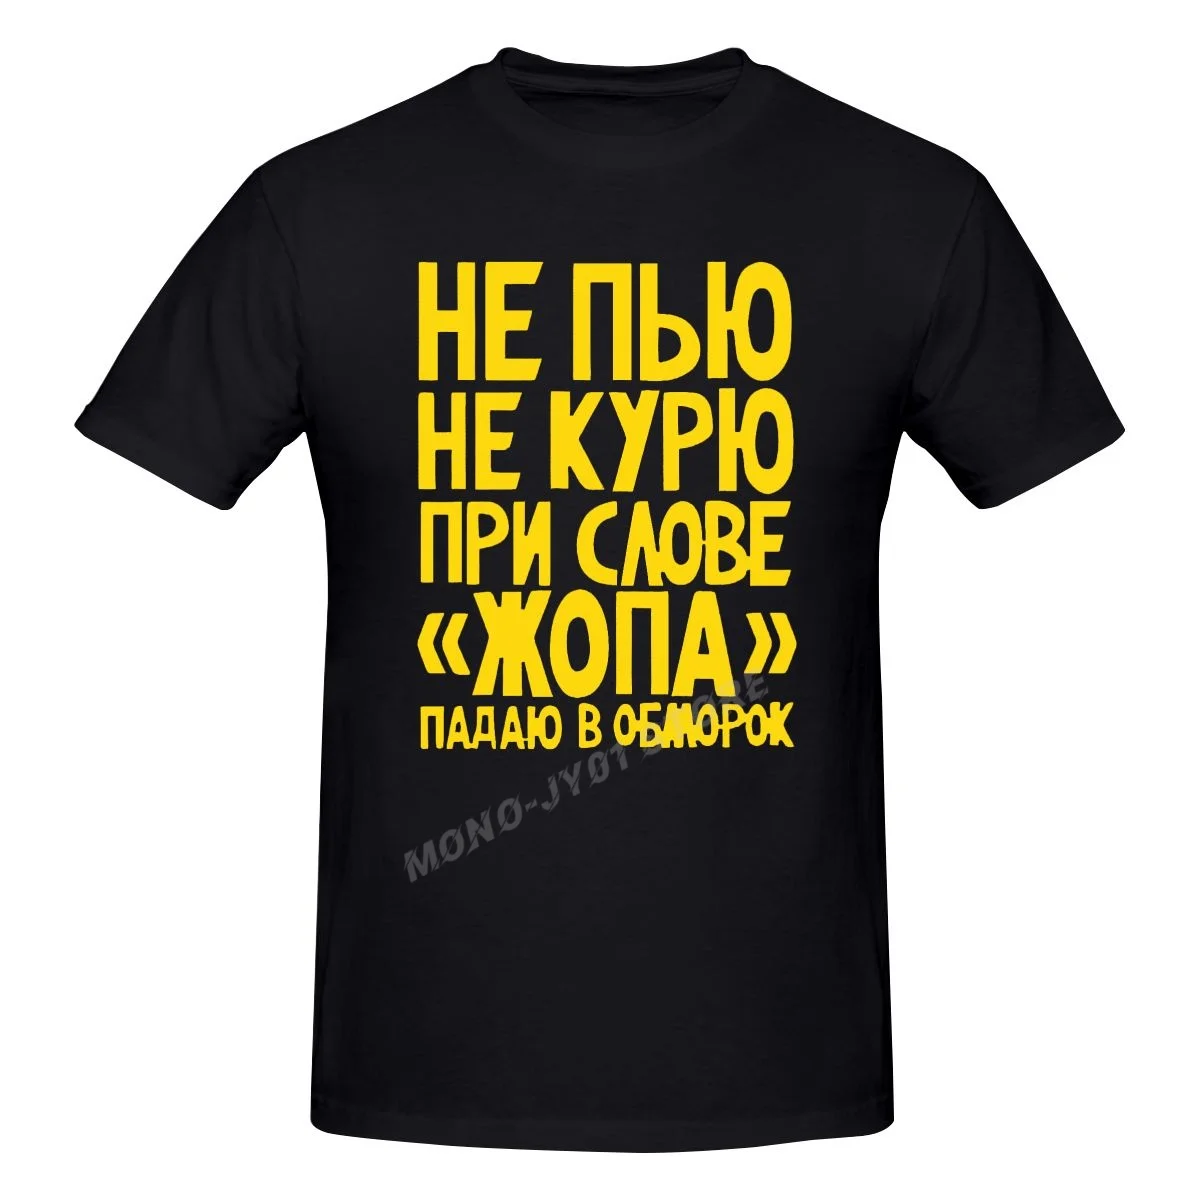 

Russia Not Smoke Or Drink Funny T-Shirt For Men Male Casual Short Sleeve Cotton Humor Joke Streetwear T Shirt Summer Tops Tee